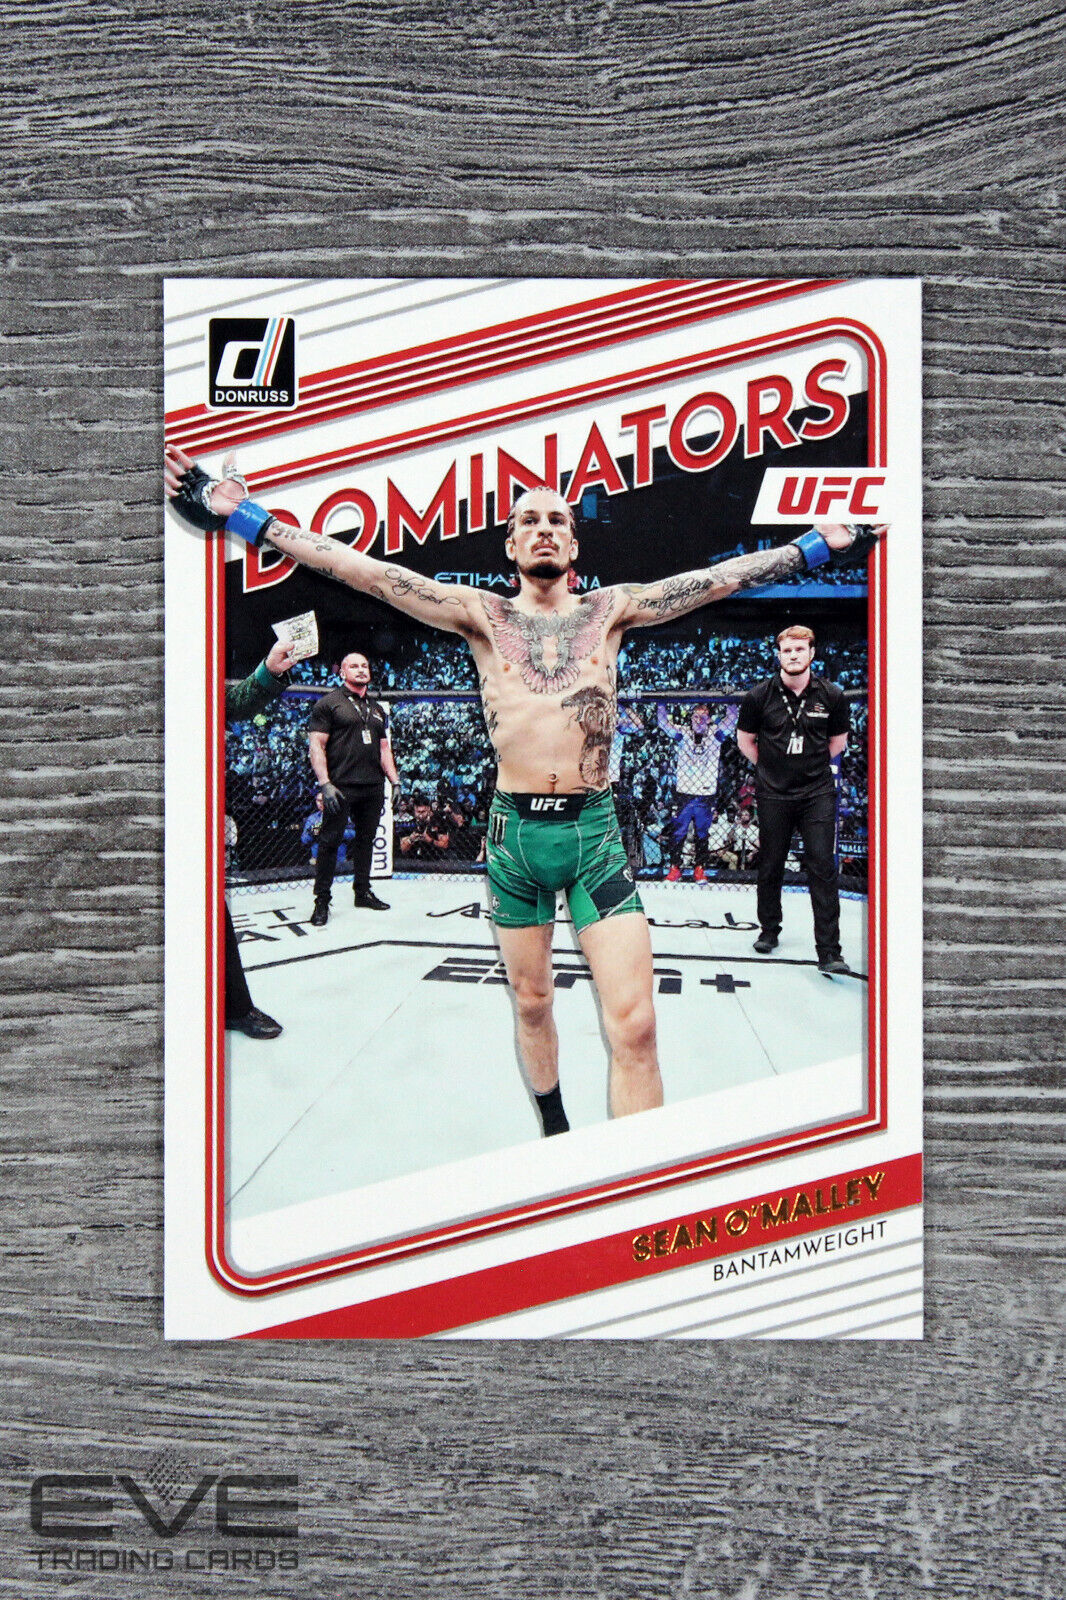 2023 Panini Donruss UFC Card "Dominators" #10 Sean O'Malley - NM/M